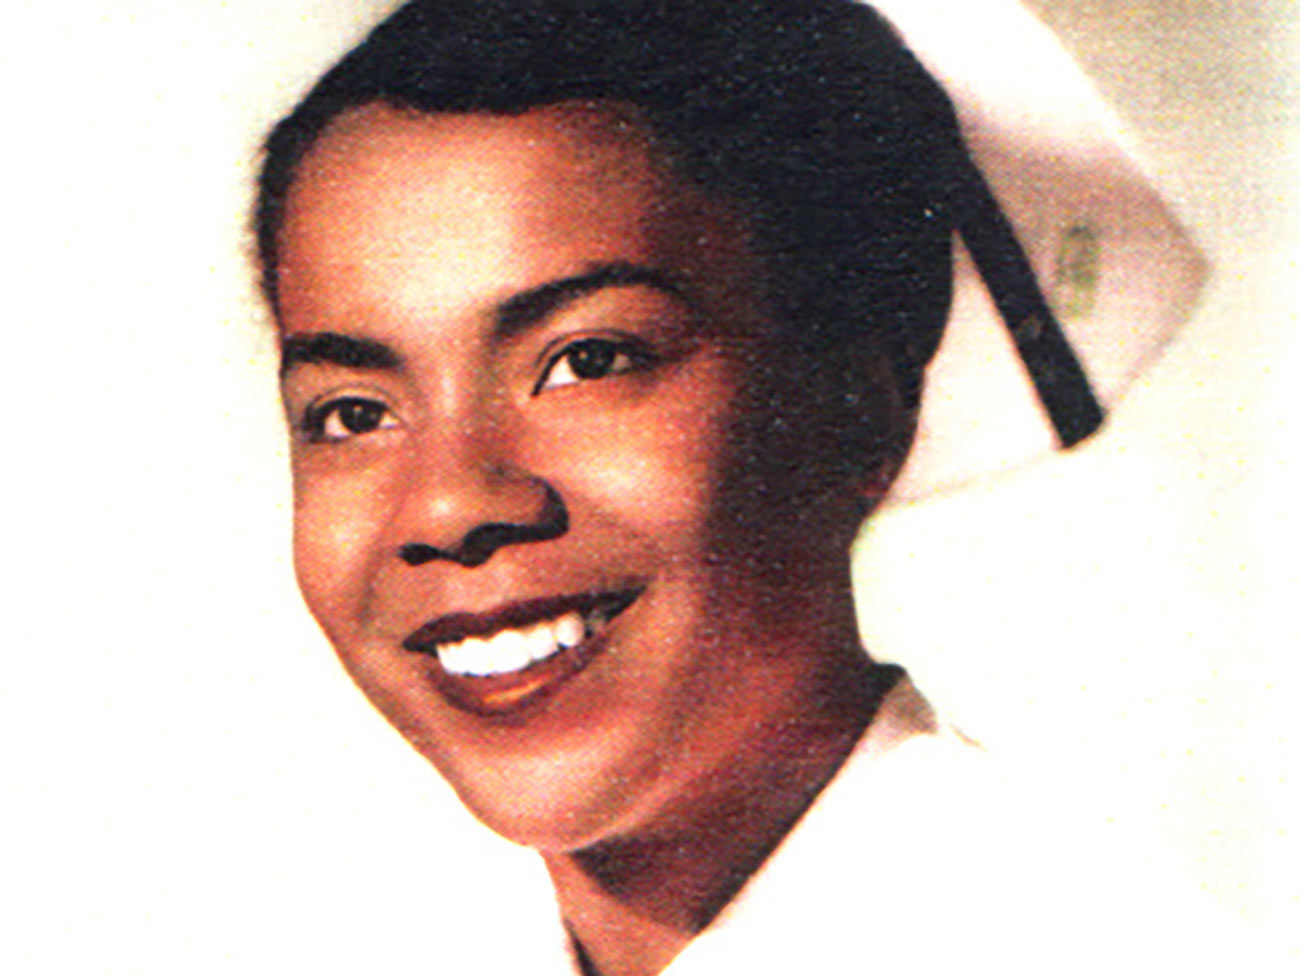 Jessie Head Cunningham as a student at Kaiser Foundation School of Nursing, 1954